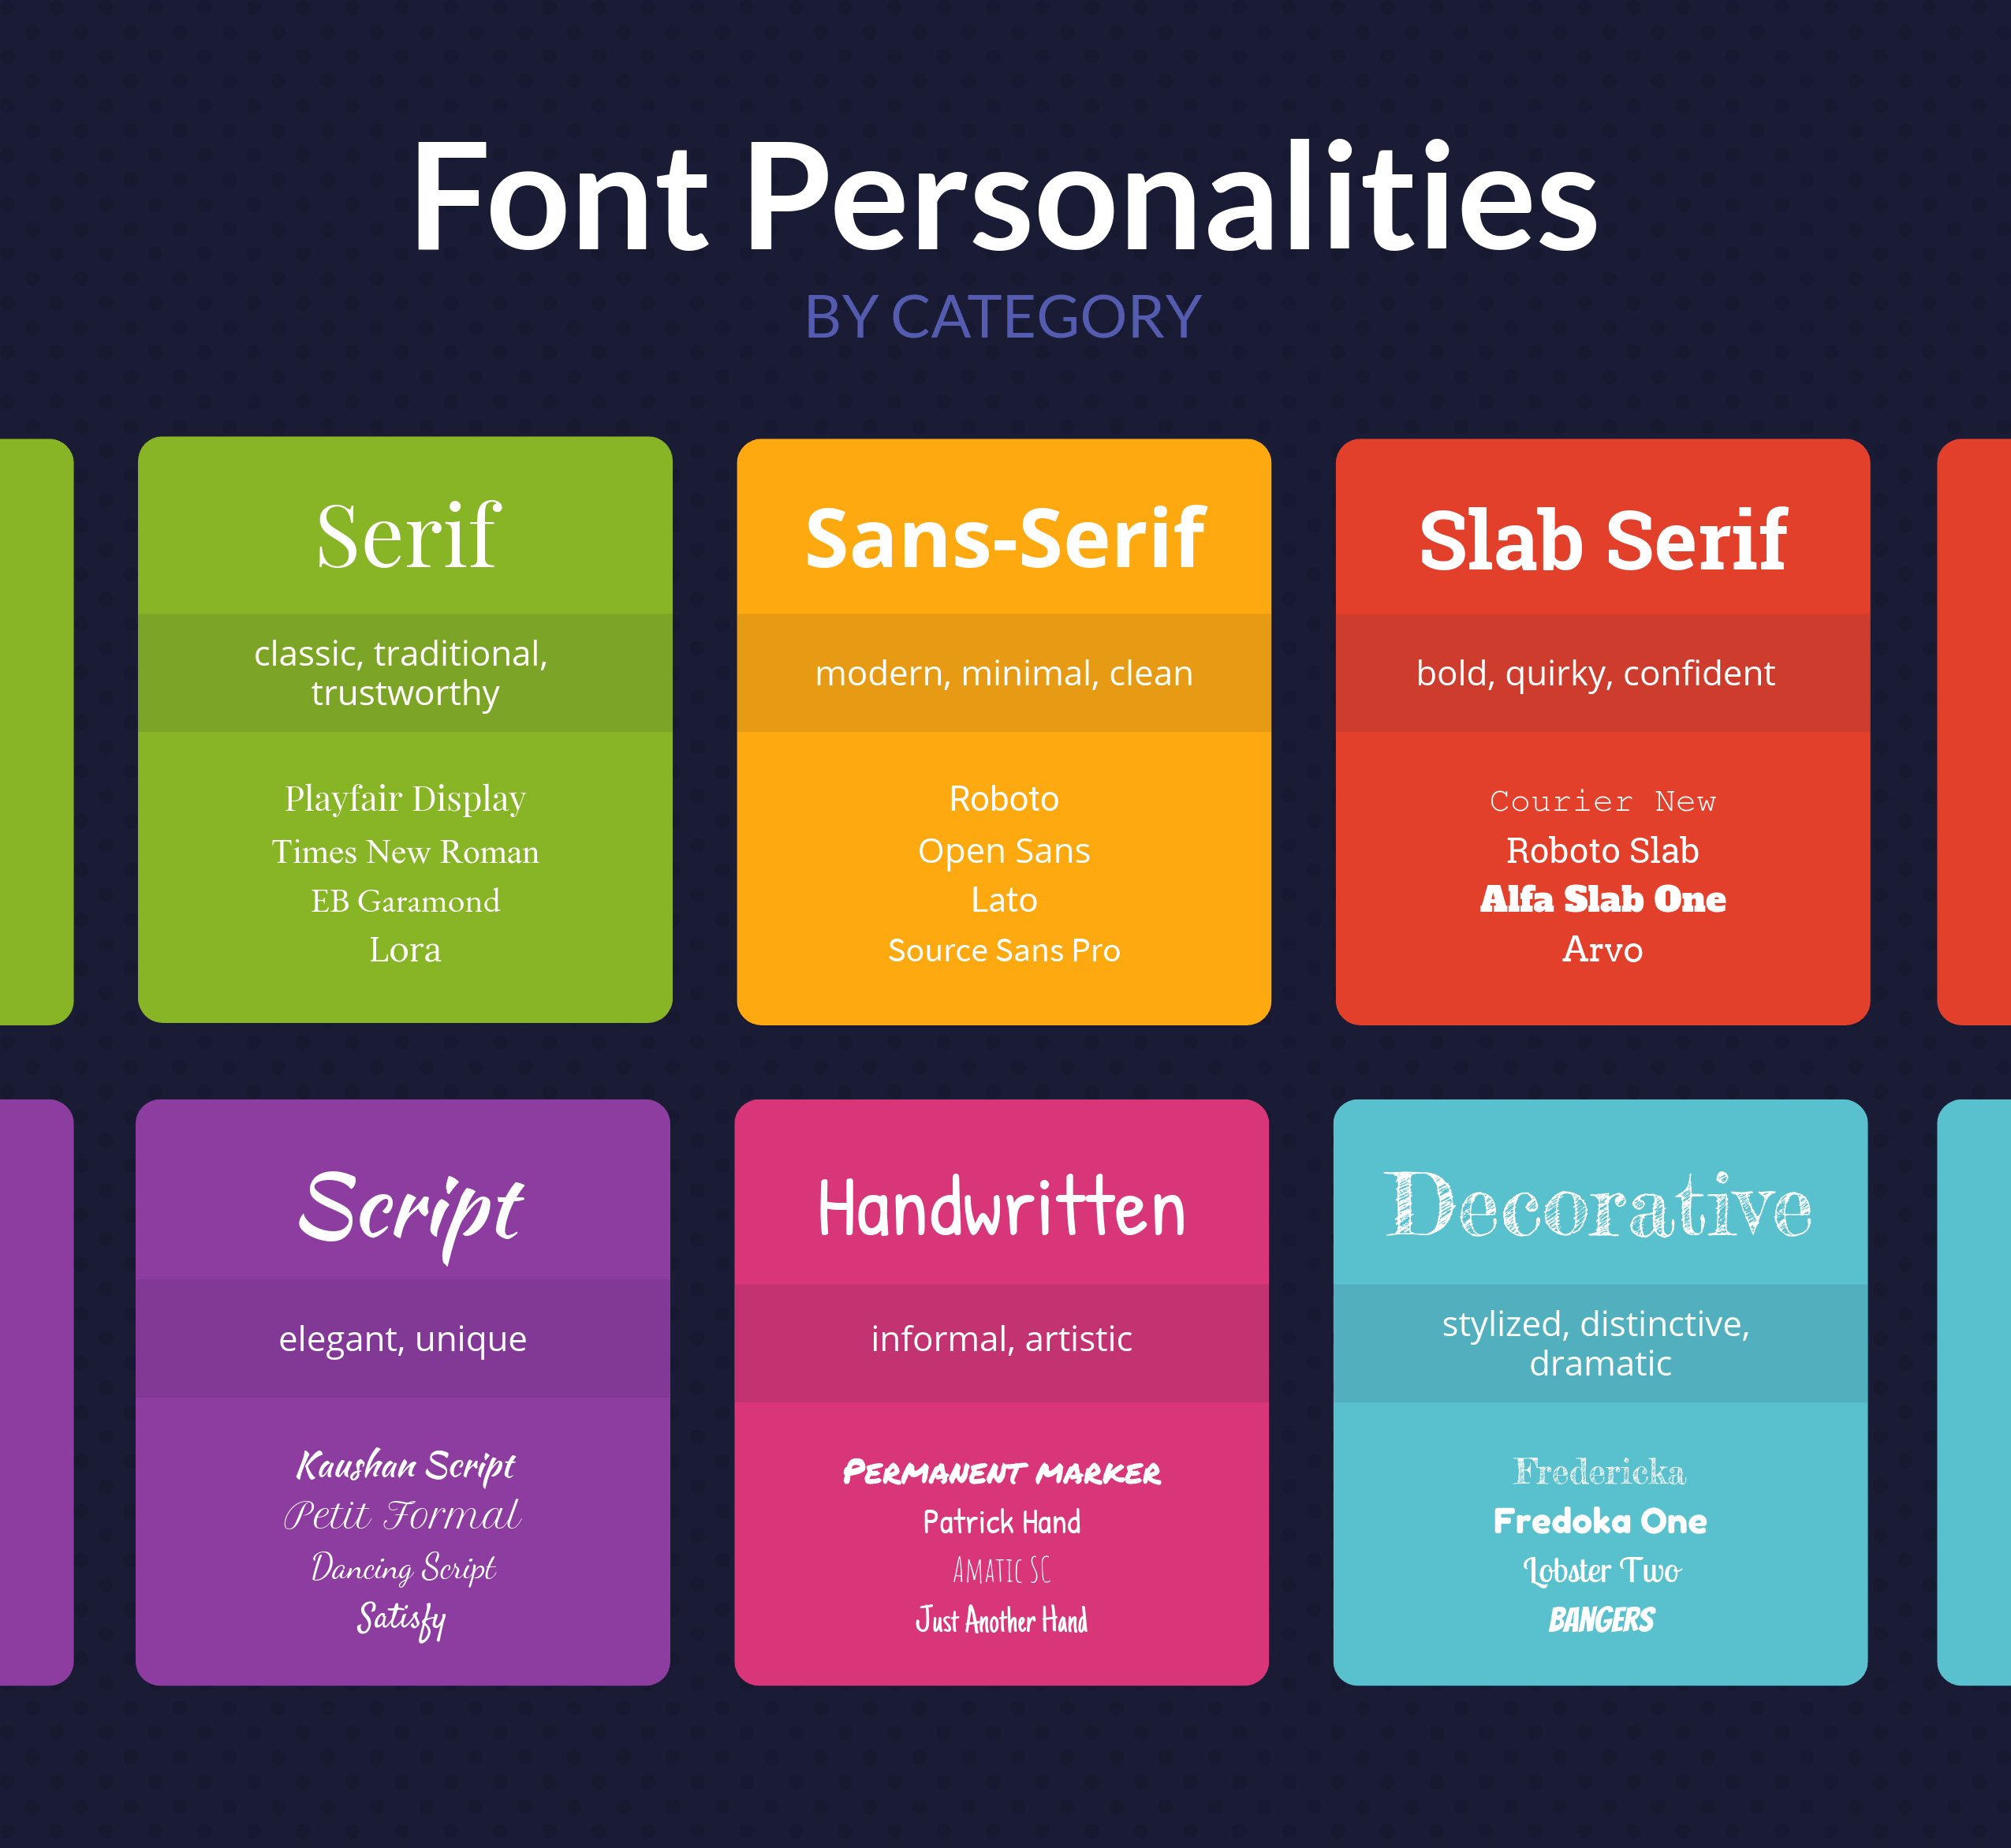 font-categories-personalities